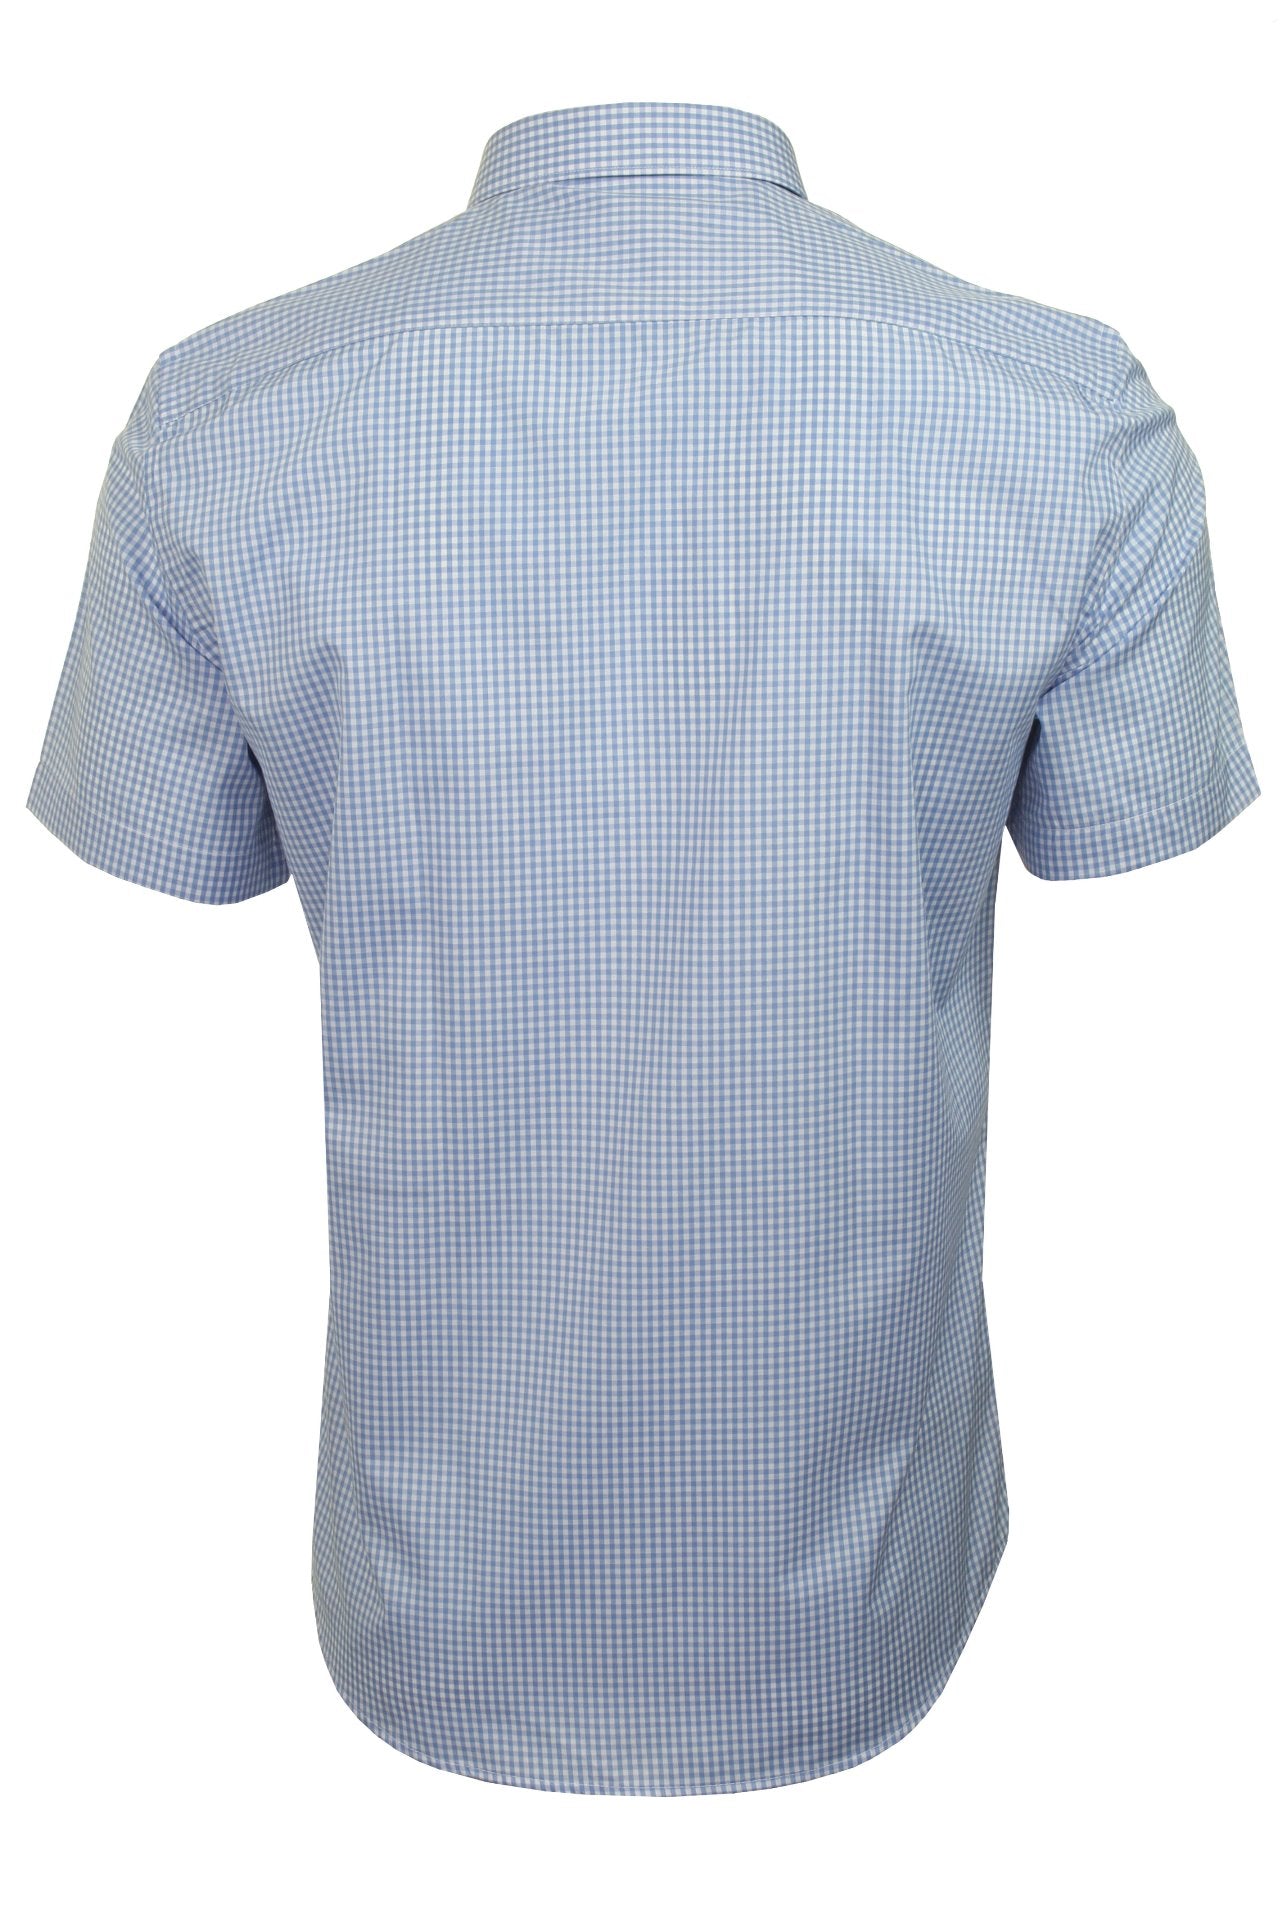 Xact Mens Short Sleeved Gingham Check Shirt - Slim Fit-3